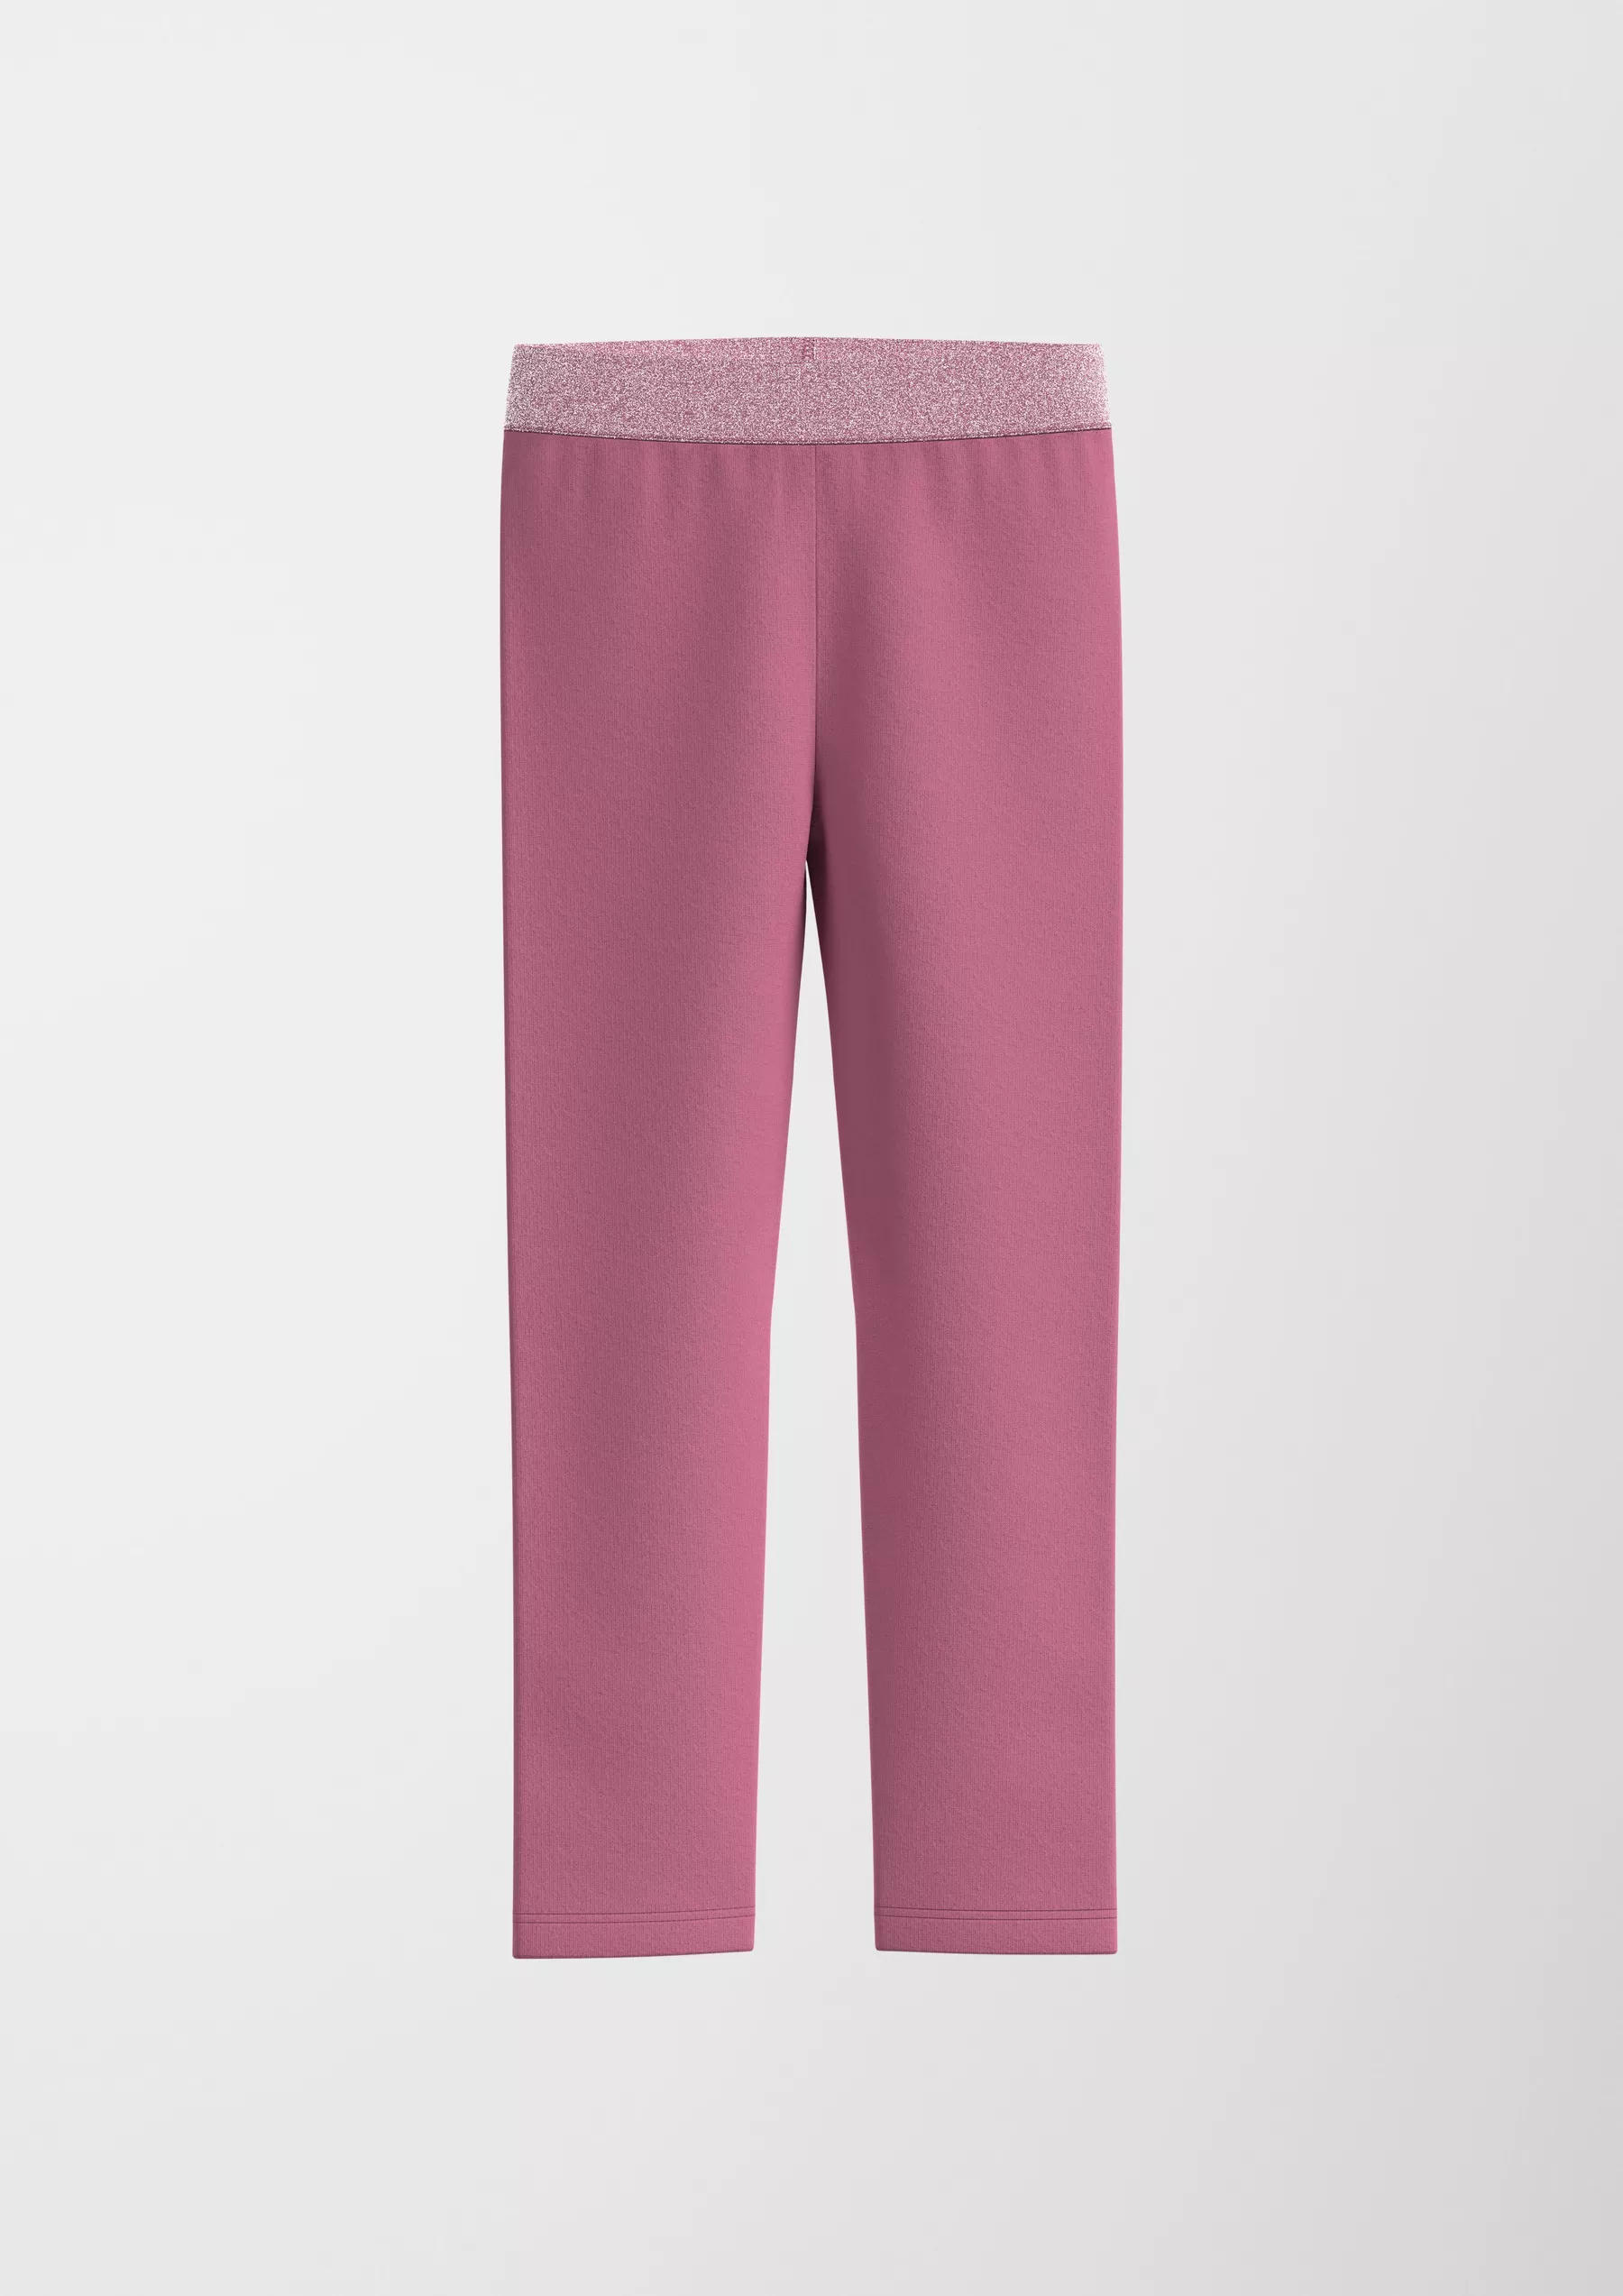 Лосины QS by s. Oliver для девочек, размер 122, розовый, 2133919 лосины soft cover beself розовый